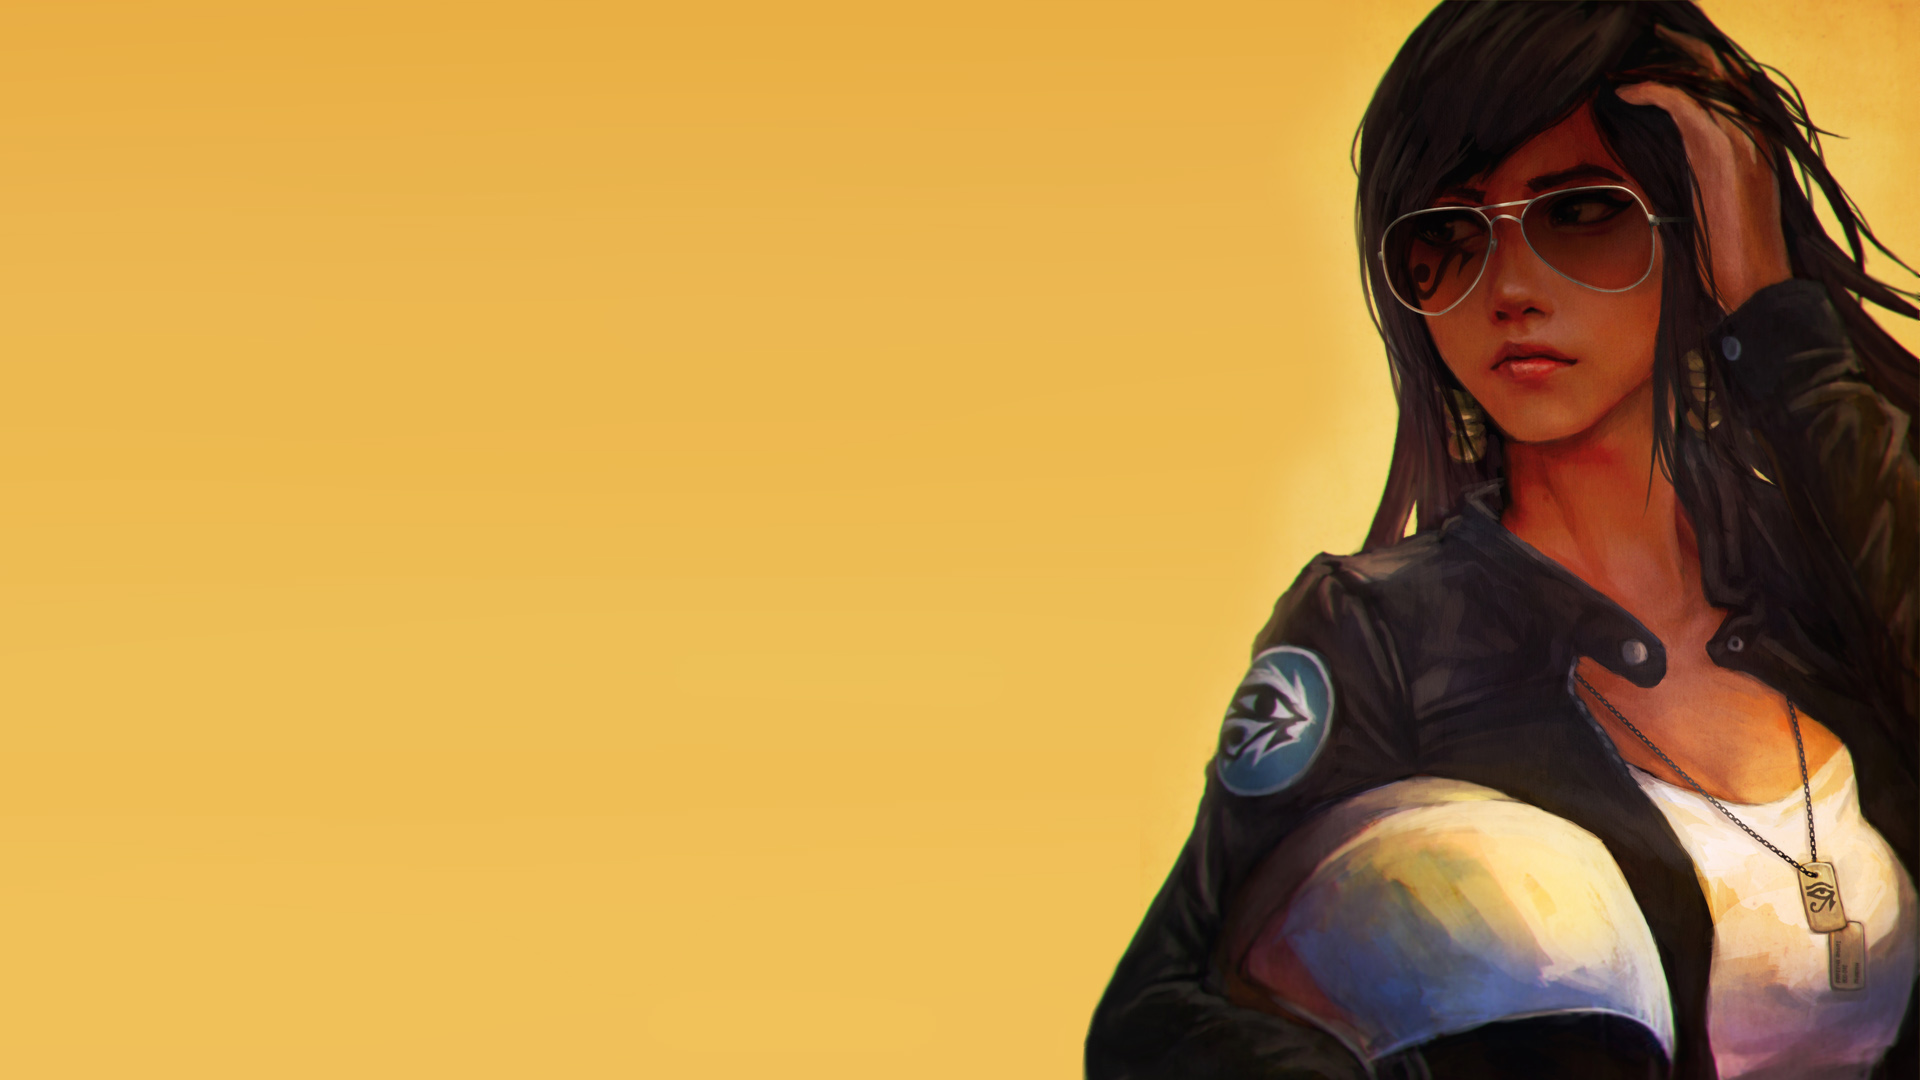 General 1920x1080 Overwatch Pharah (Overwatch) sunglasses women women with shades black hair leather jacket jacket digital art video game art